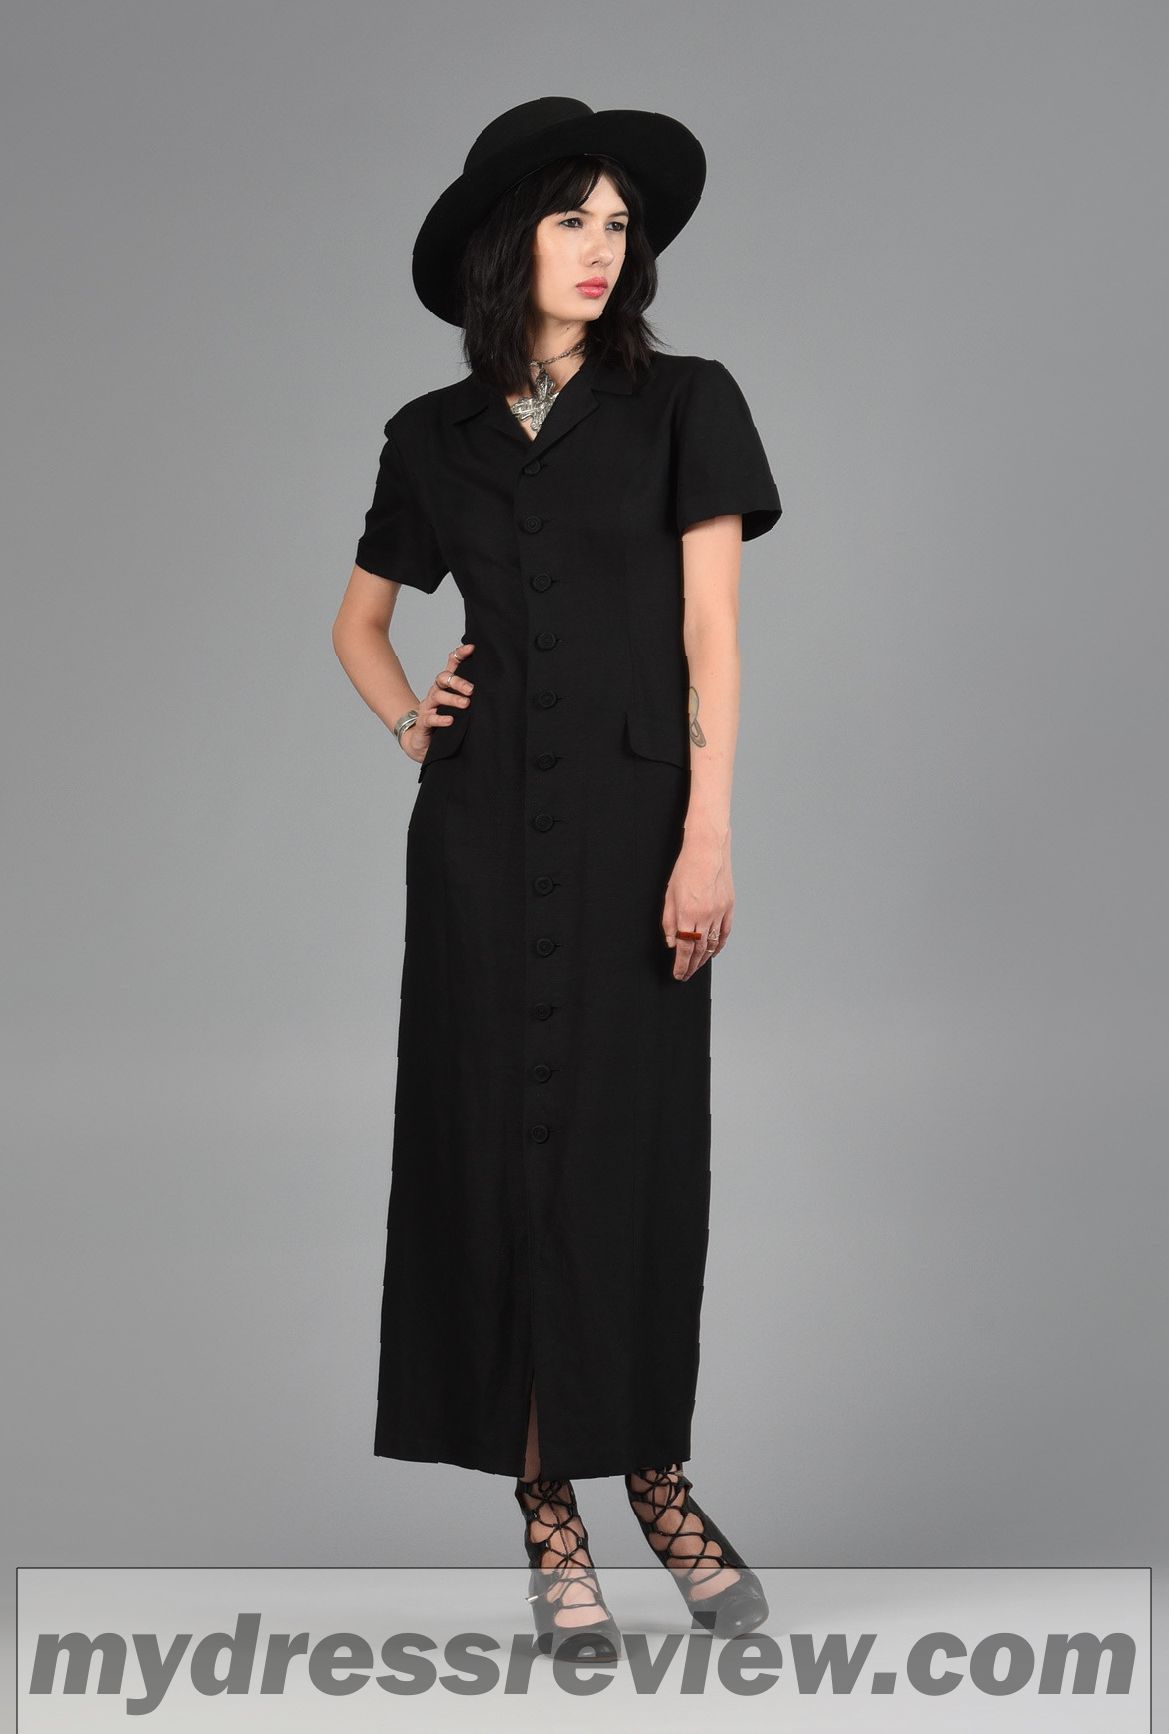 Black Button Front Dress : Oscar Fashion Review - MyDressReview